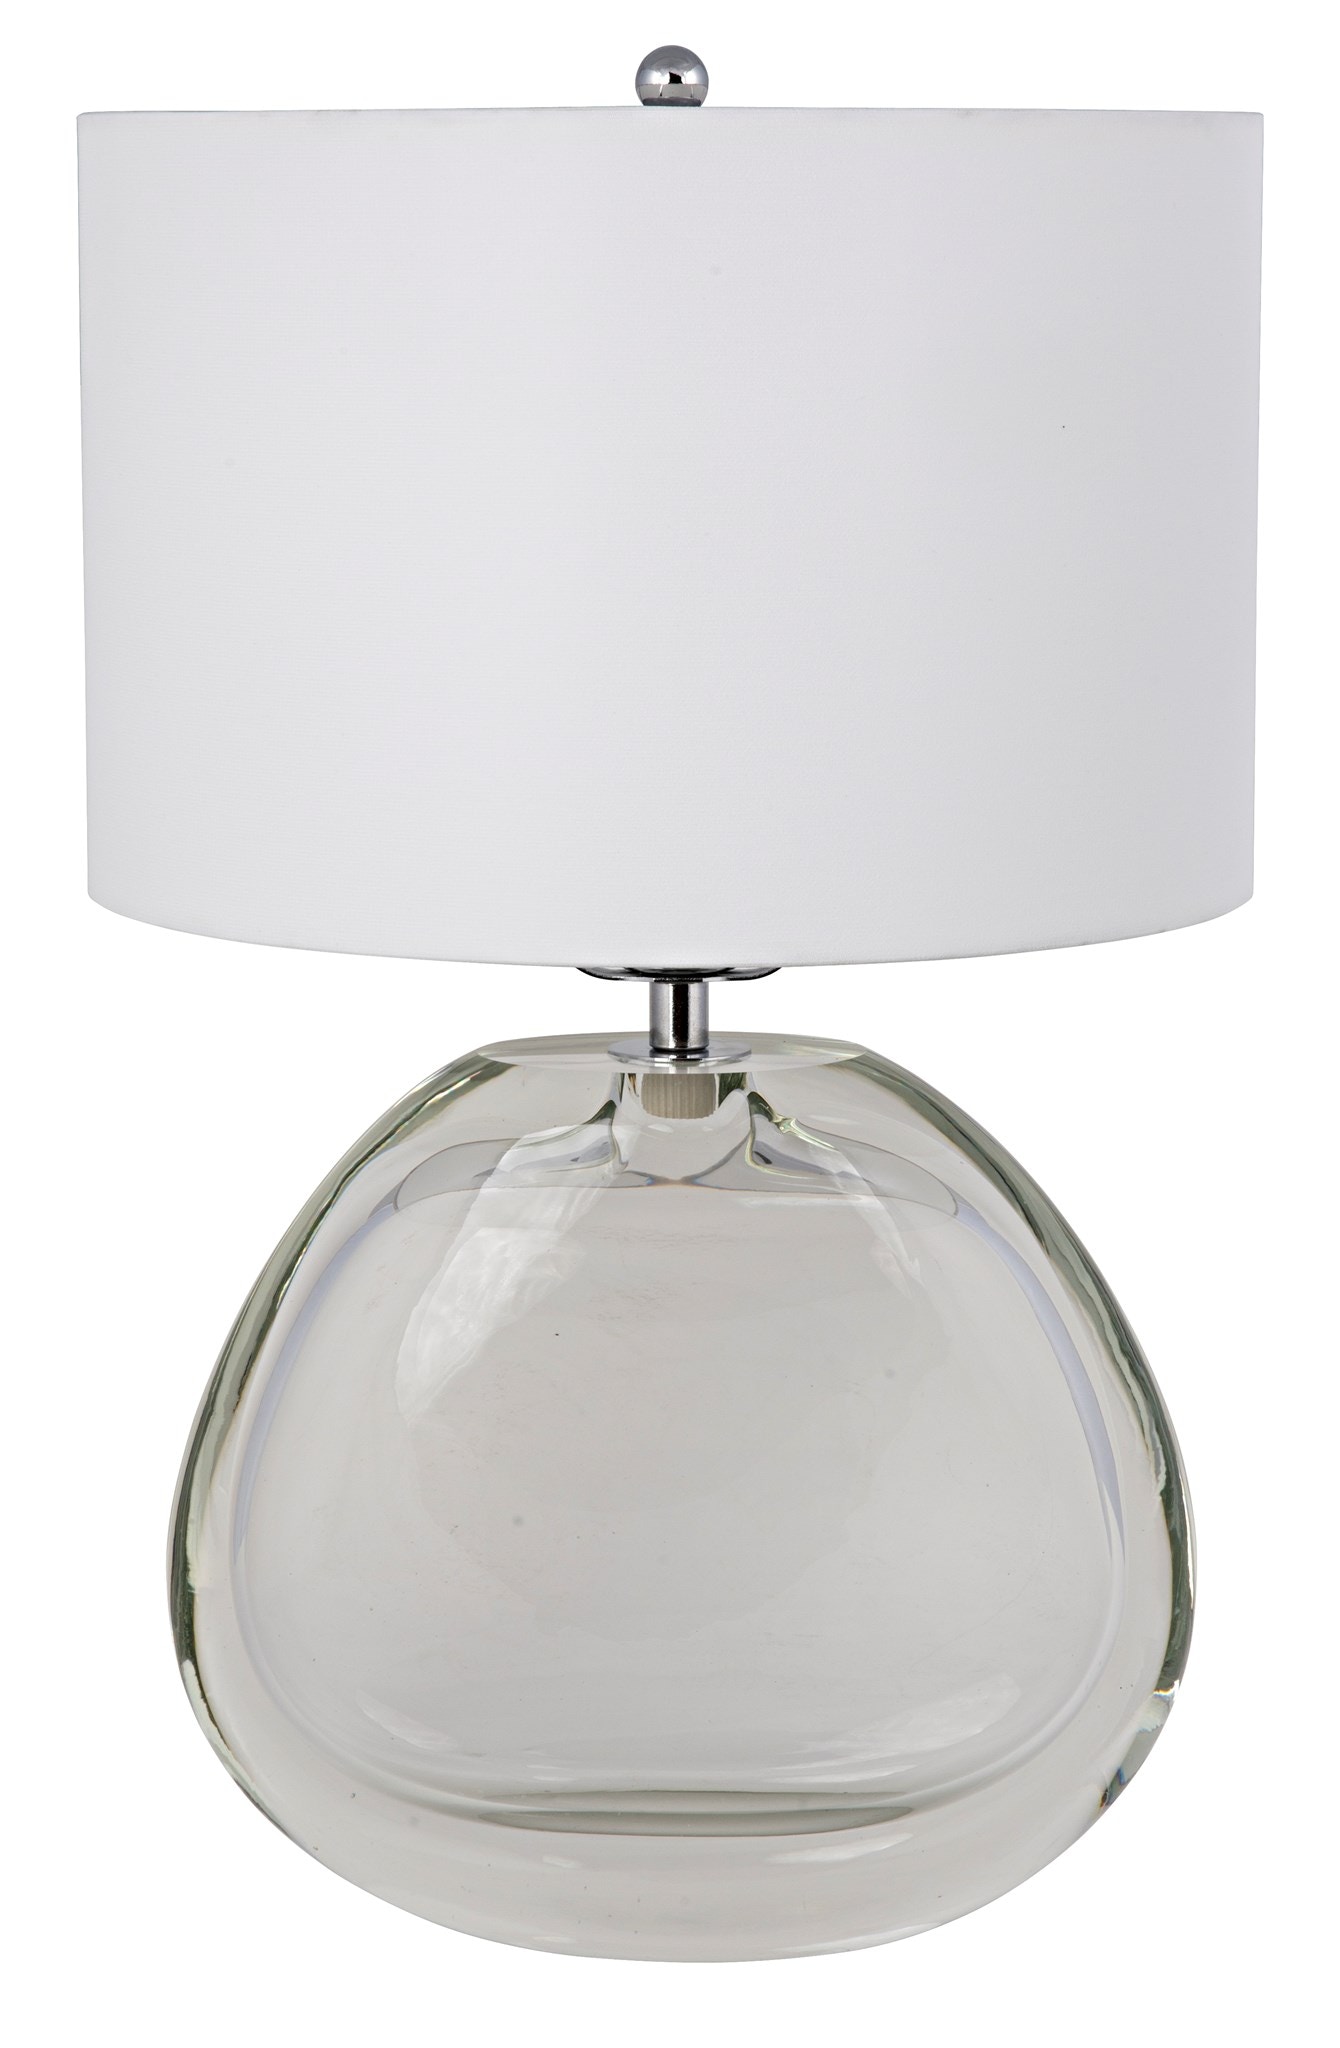 horizontal table lamp